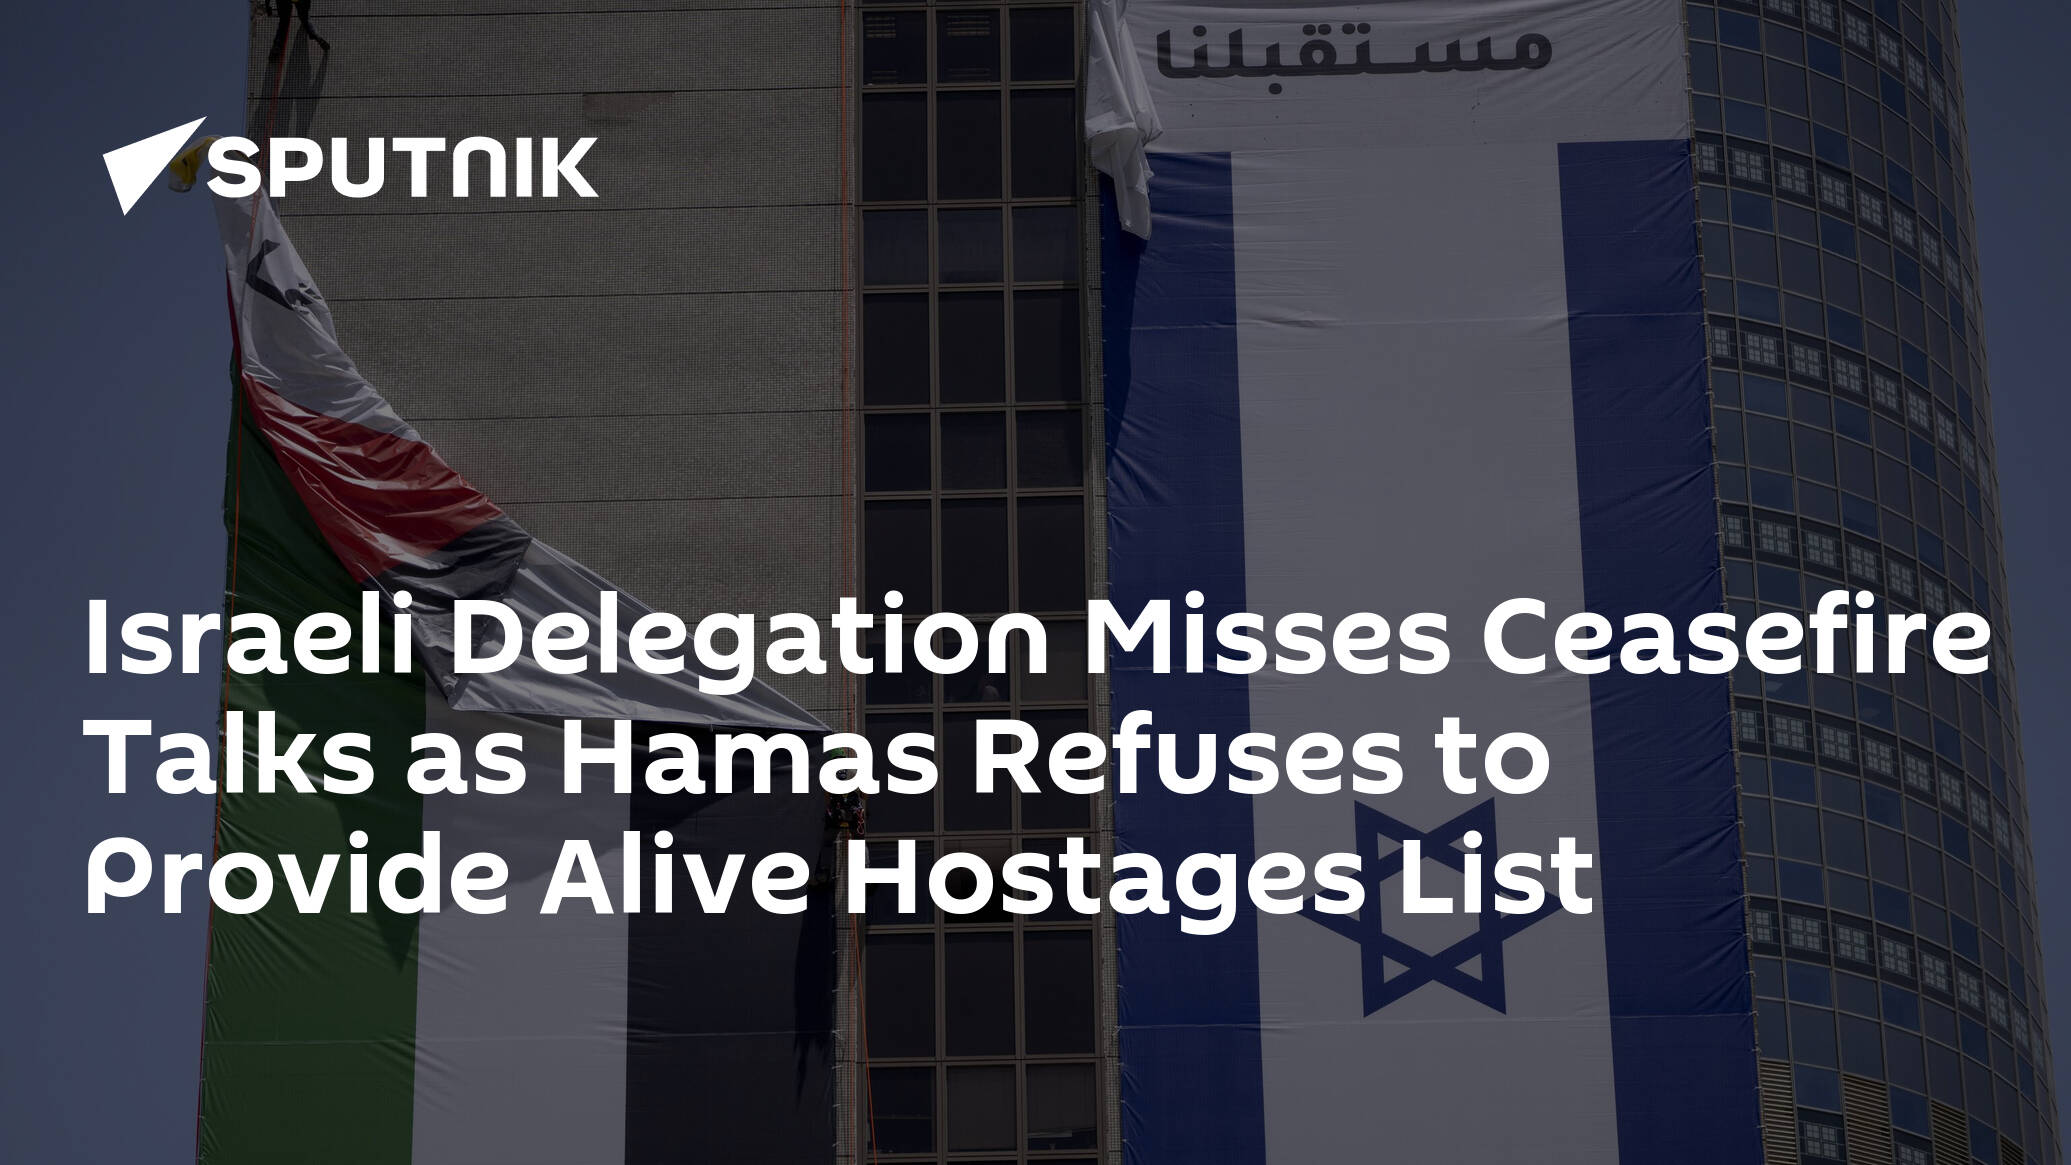 Israeli Delegation Misses Ceasefire Talks as Hamas Refuses to Provide Alive Hostages List